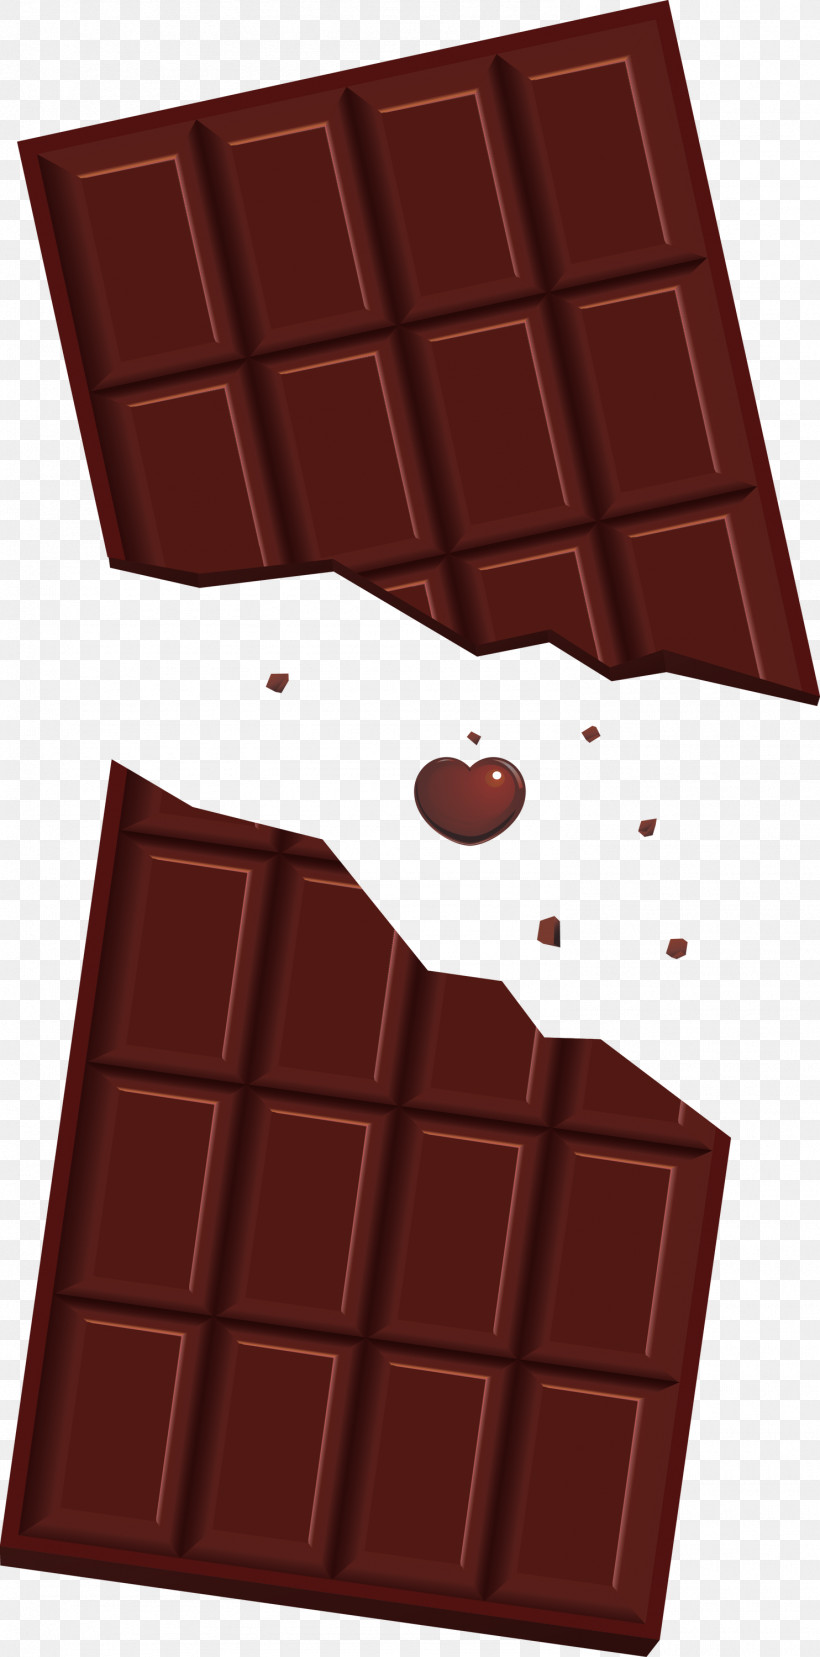 Kawaii Chocolate Bar Opened Chocolate Bar Unwrapped Chocolate Bar, PNG, 1484x3000px, Kawaii Chocolate Bar, Chocolate, Chocolate Bar, Chocolate Letter, Confectionery Download Free